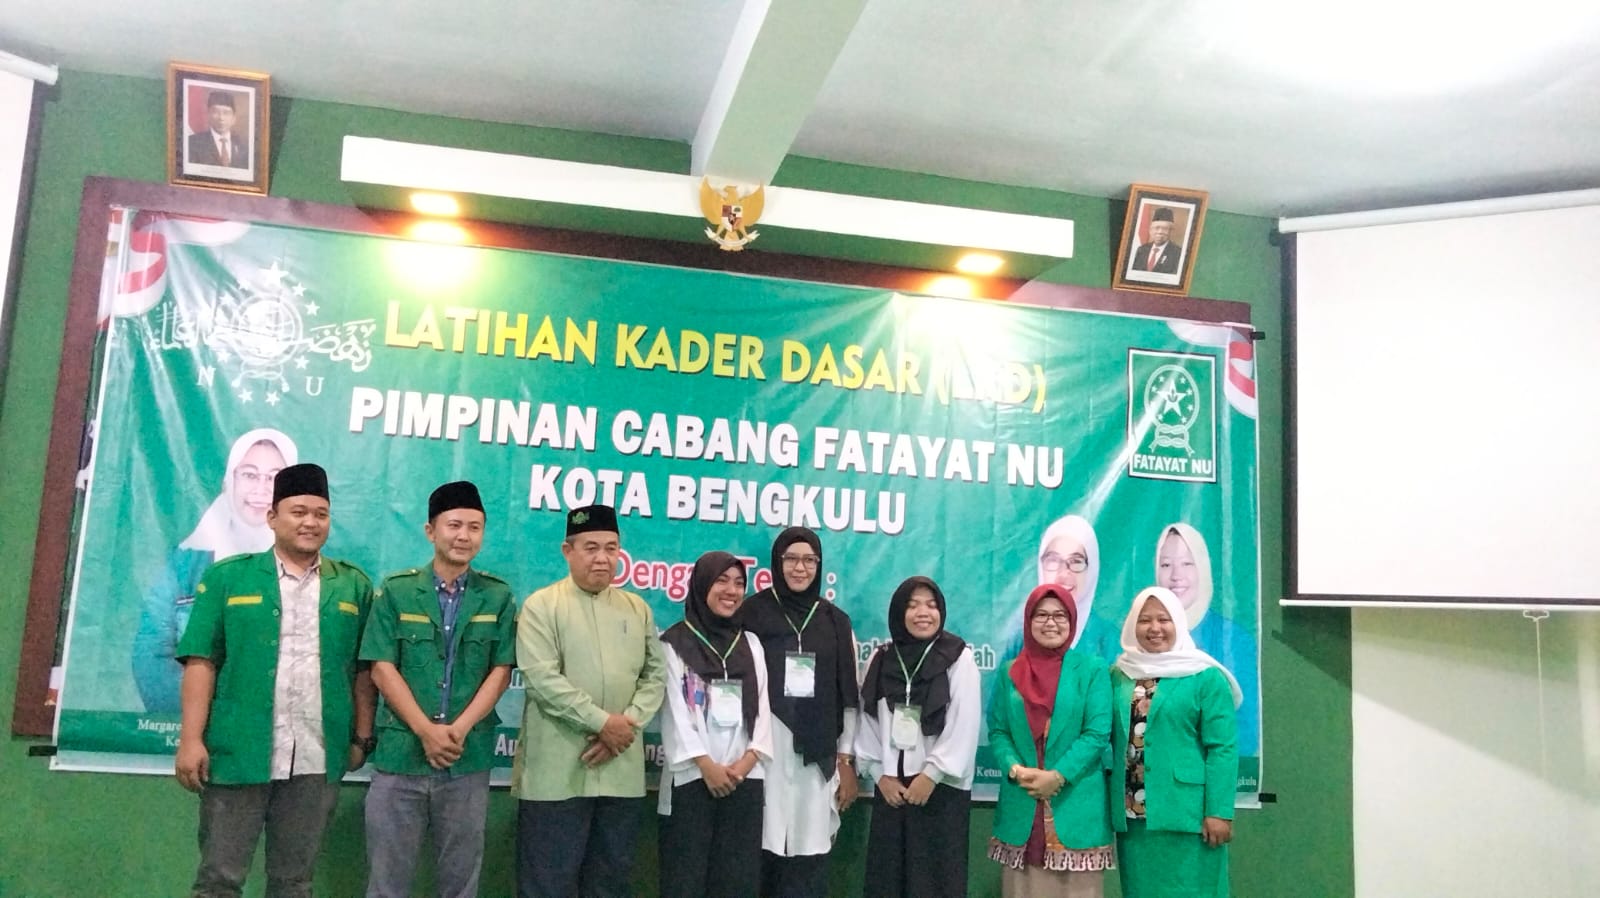 Sukses, Pembukaan Latihan Kader Dasar Fatayat NU Kota Bengkulu